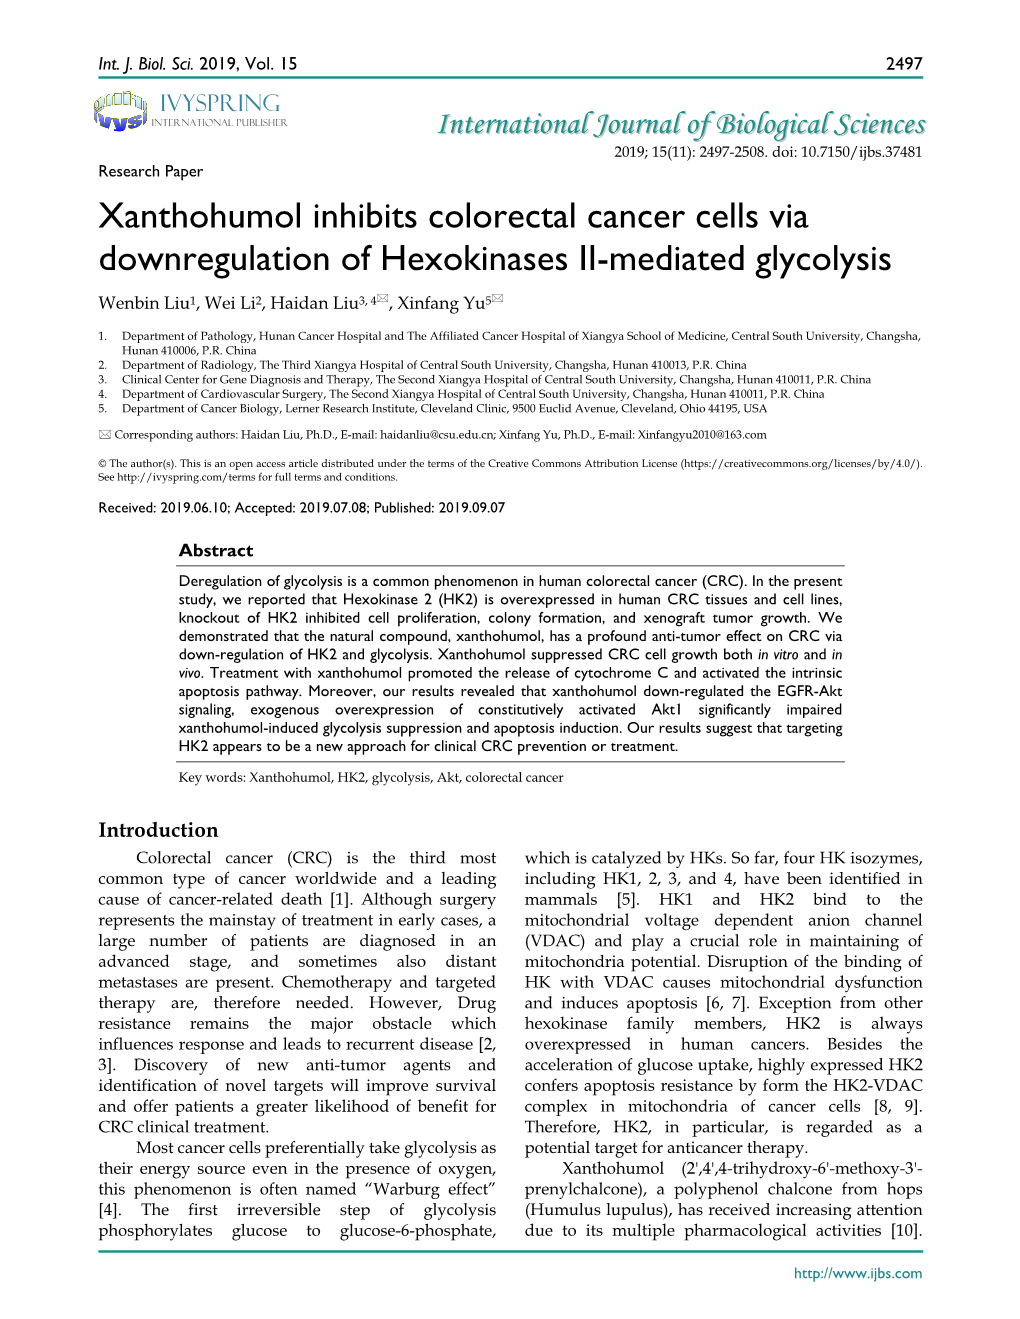 Xanthohumol Inhibits Colorectal Cancer Cells Via Downregulation of Hexokinases II-Mediated Glycolysis Wenbin Liu1, Wei Li2, Haidan Liu3, 4, Xinfang Yu5